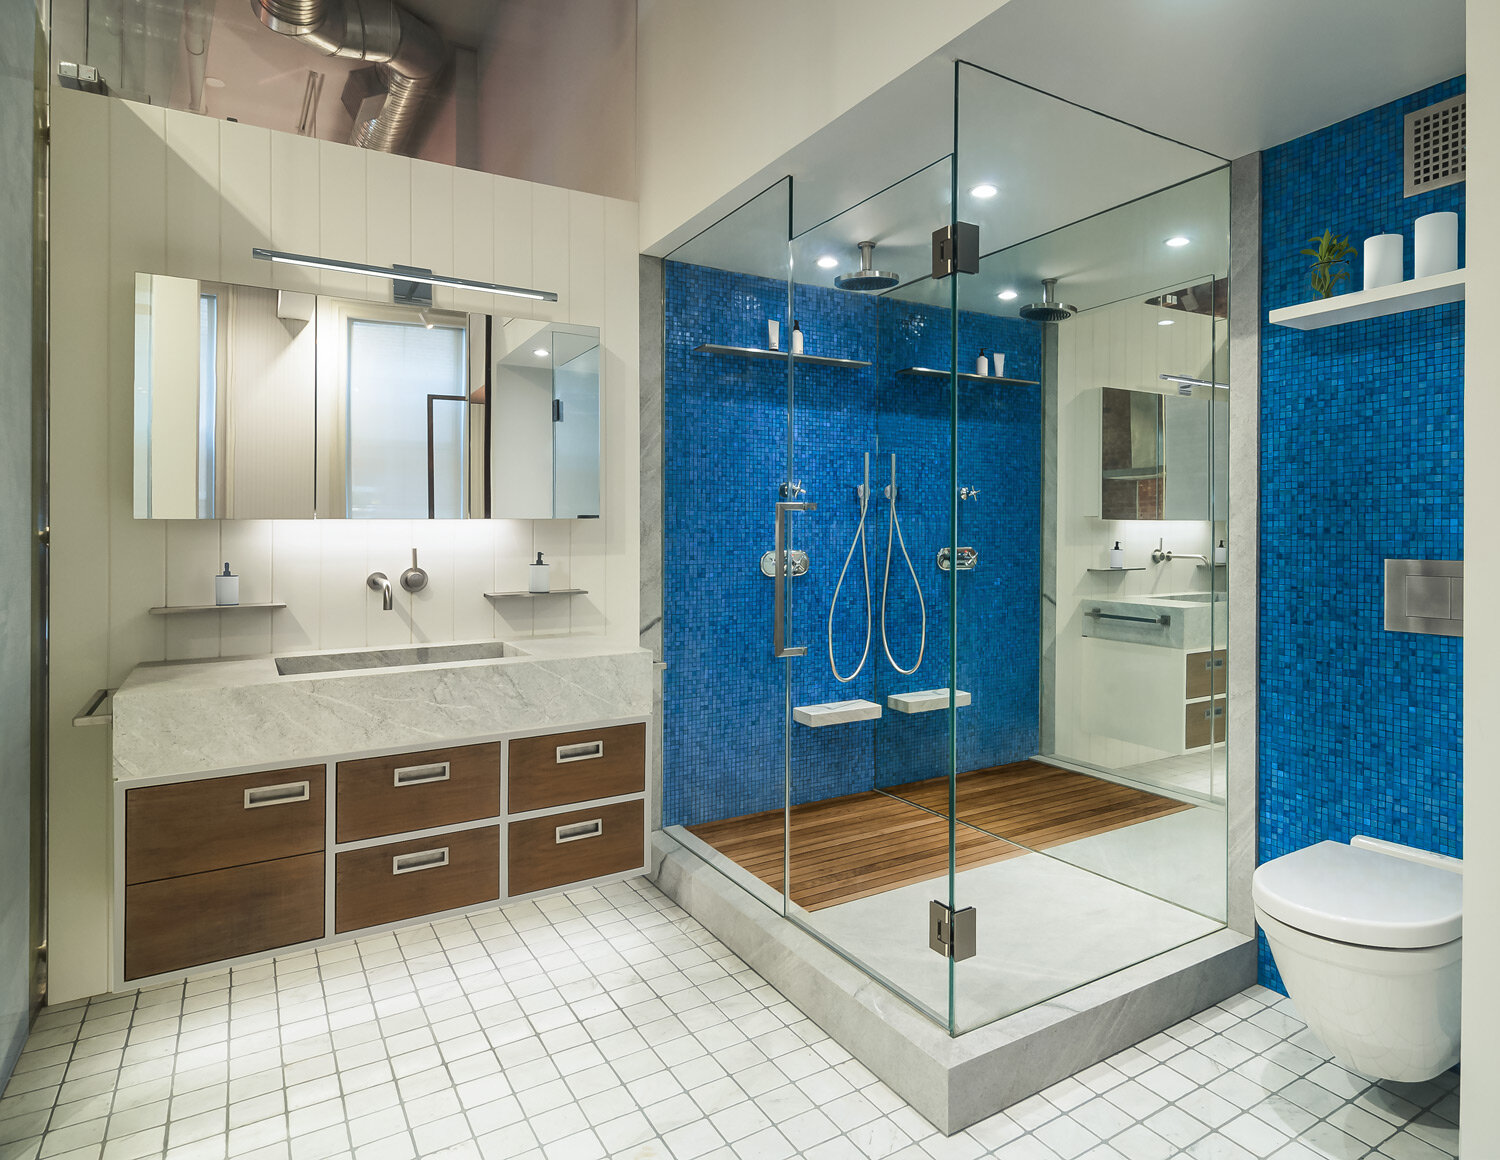 NYC SOHO LOFT GUT RENOVATION BY NEW YORK ARCHITECT AND INTERIOR DESIGNER ADI GERSHONI - View to the Main Bathroom